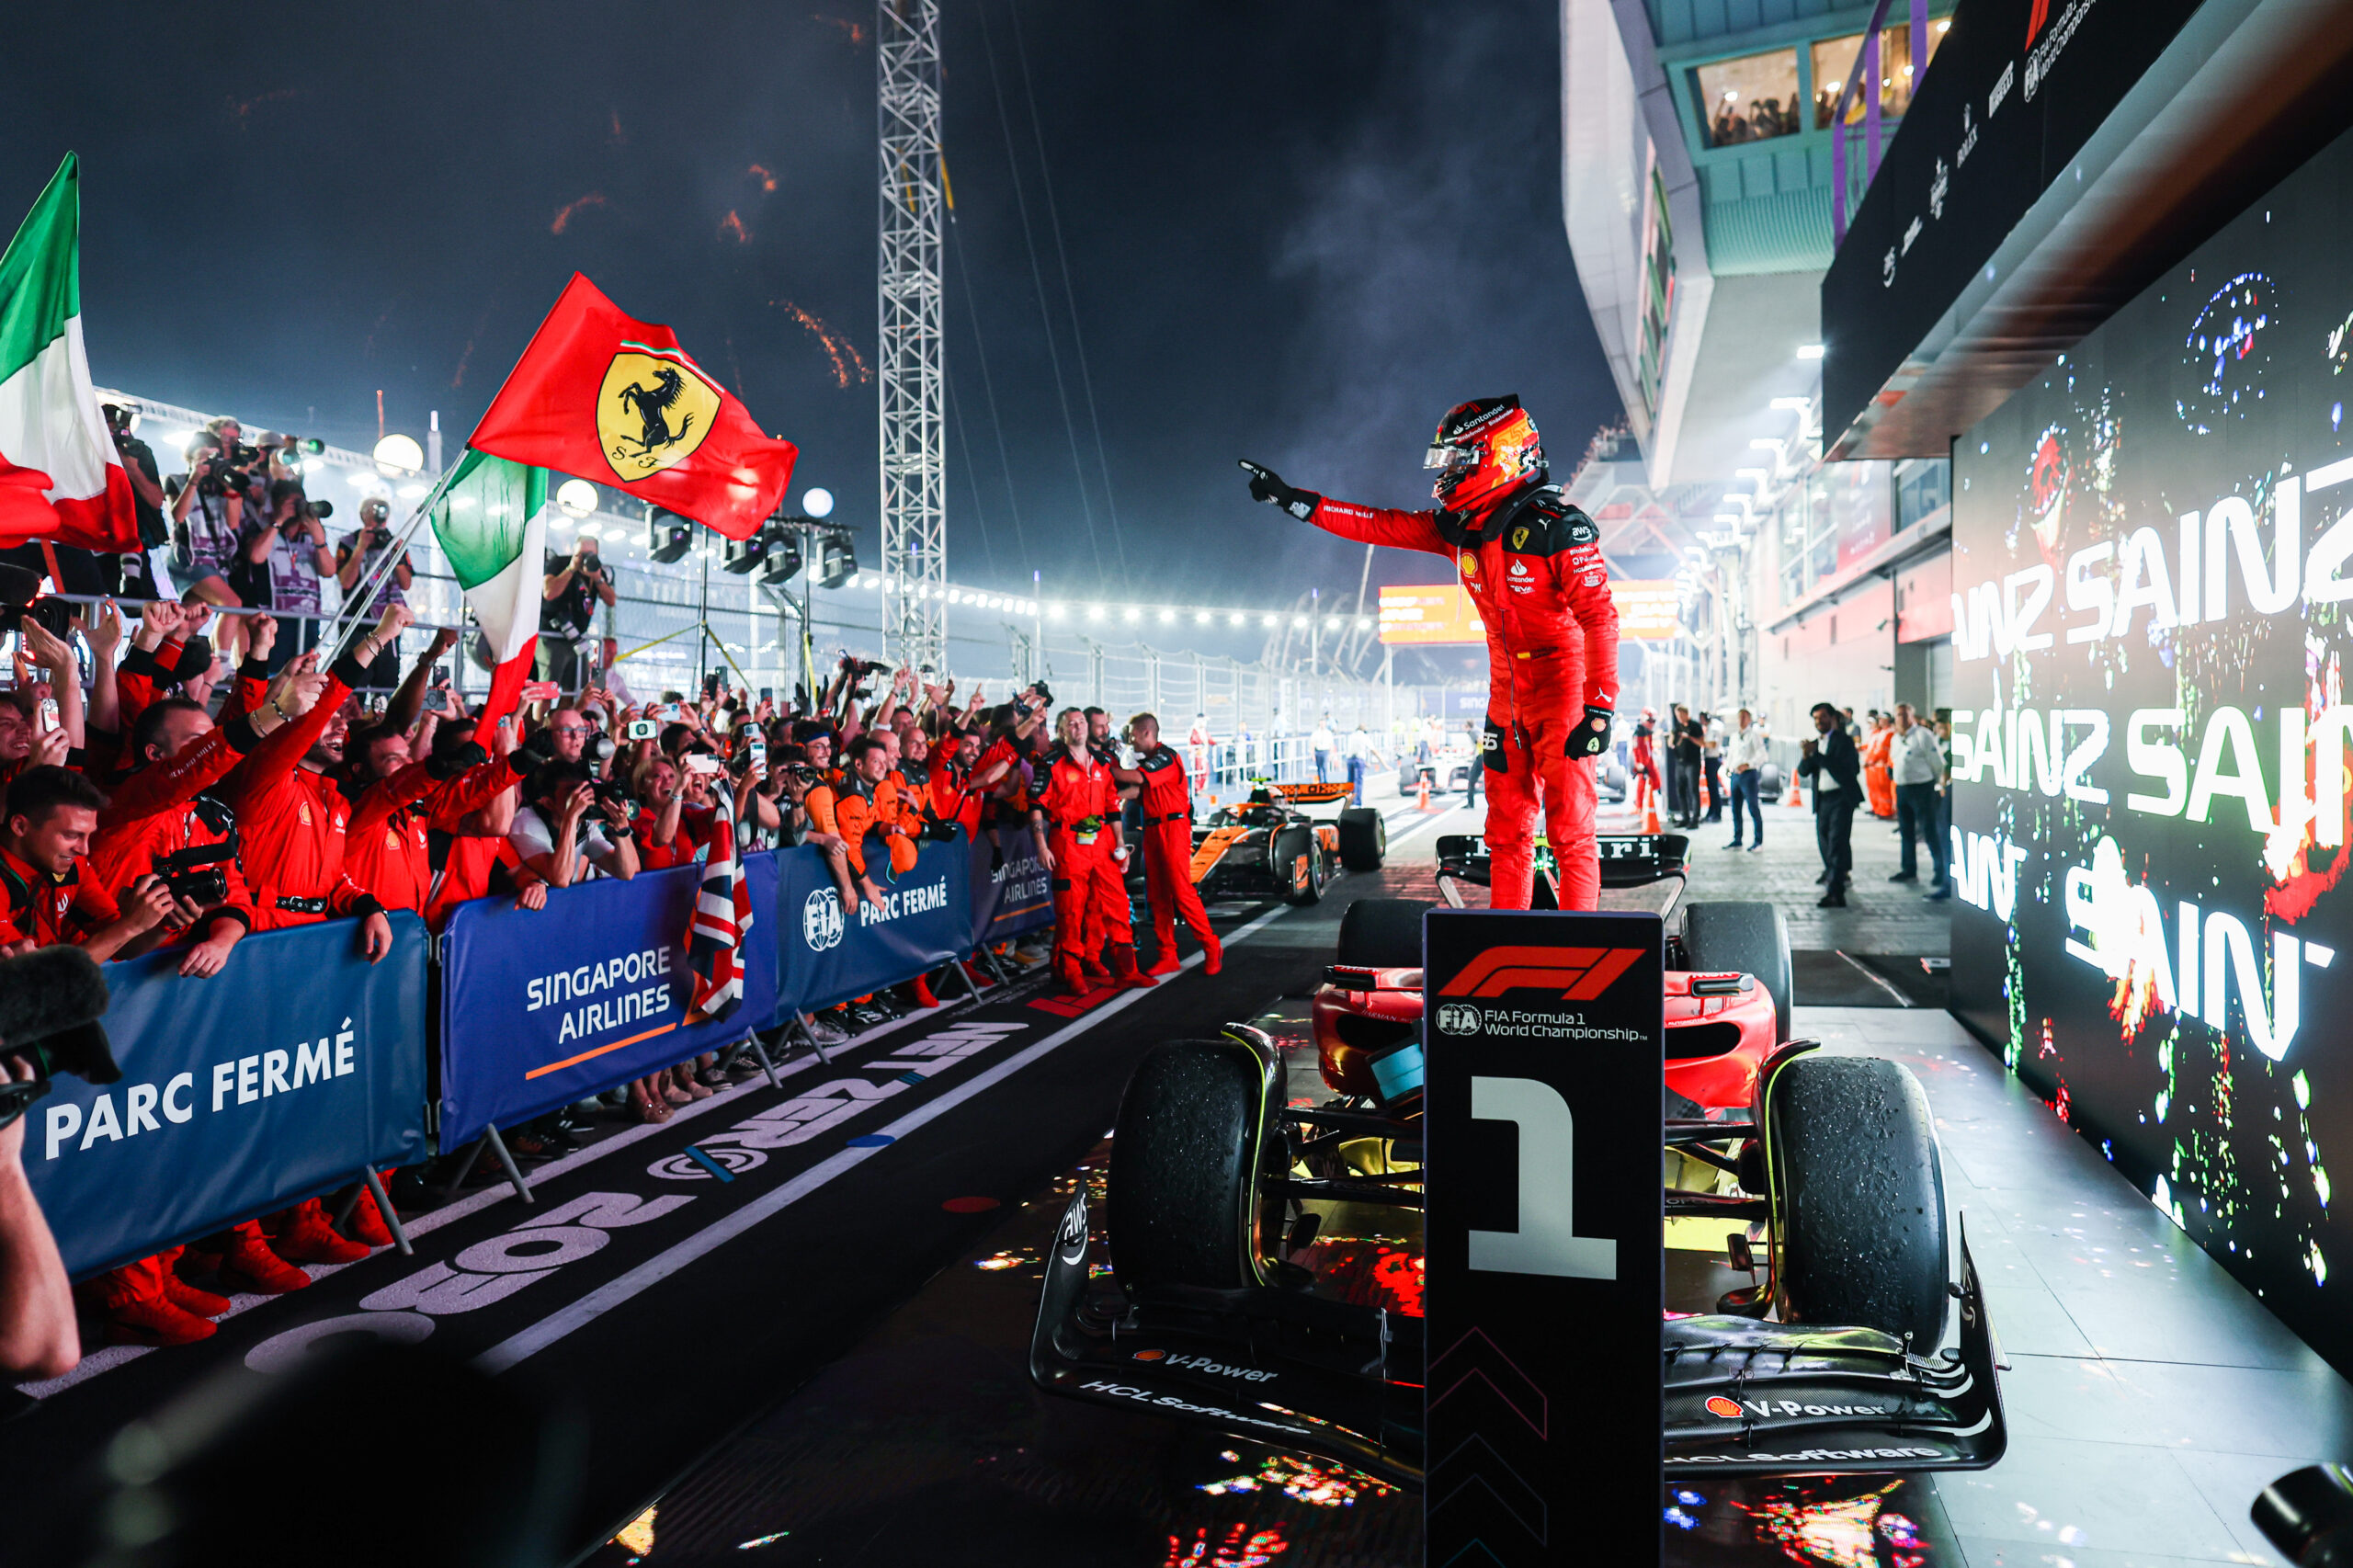 Singapore Grand Prix: Carlos Sainz took victory